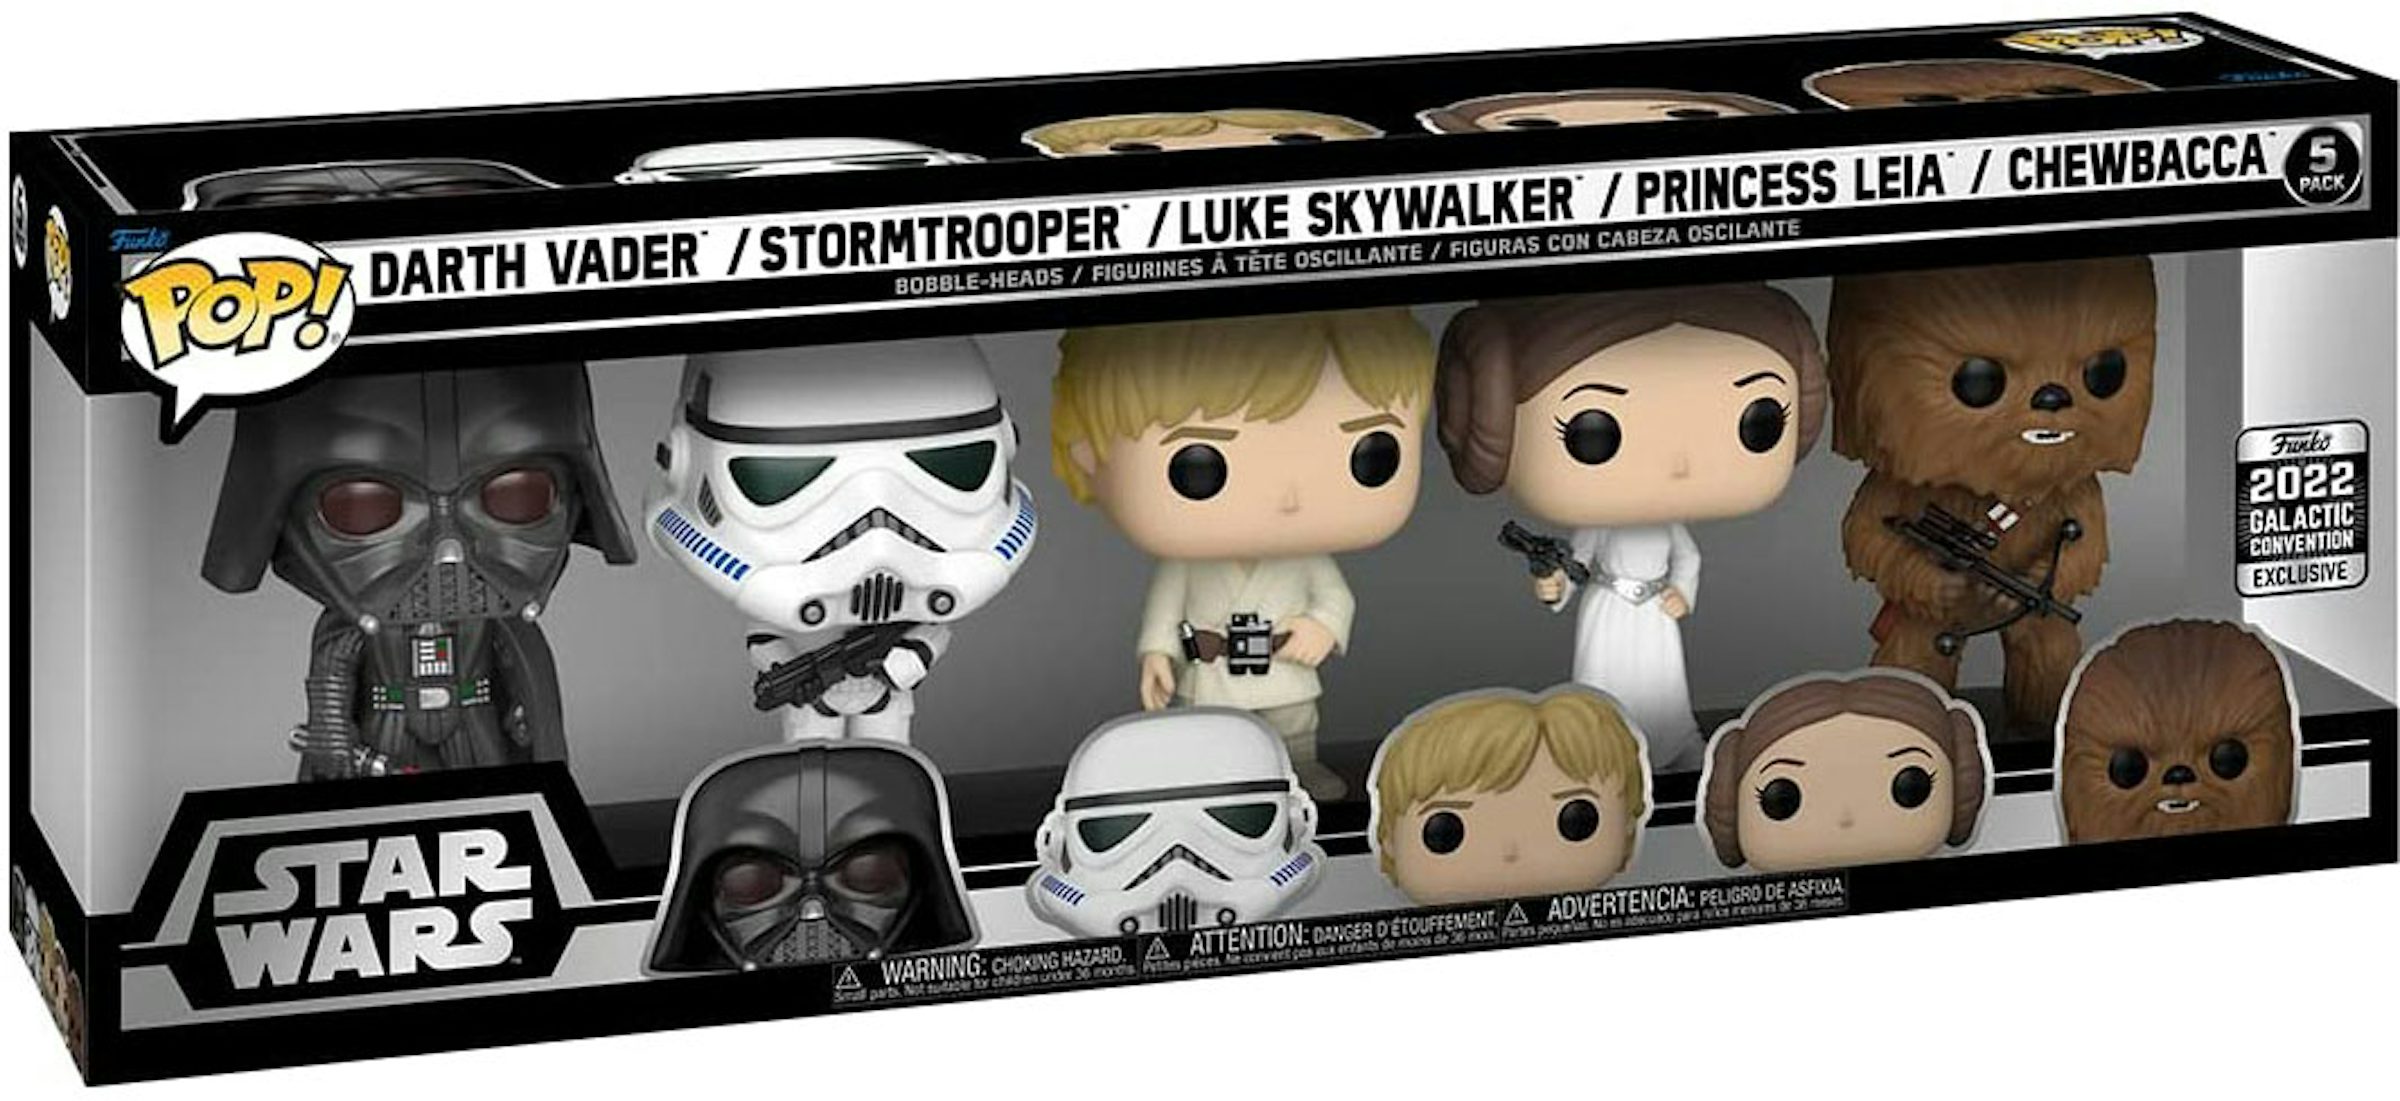 Funko Pop! Star Wars Darth Vader/Stormtrooper/Luke Skywalker